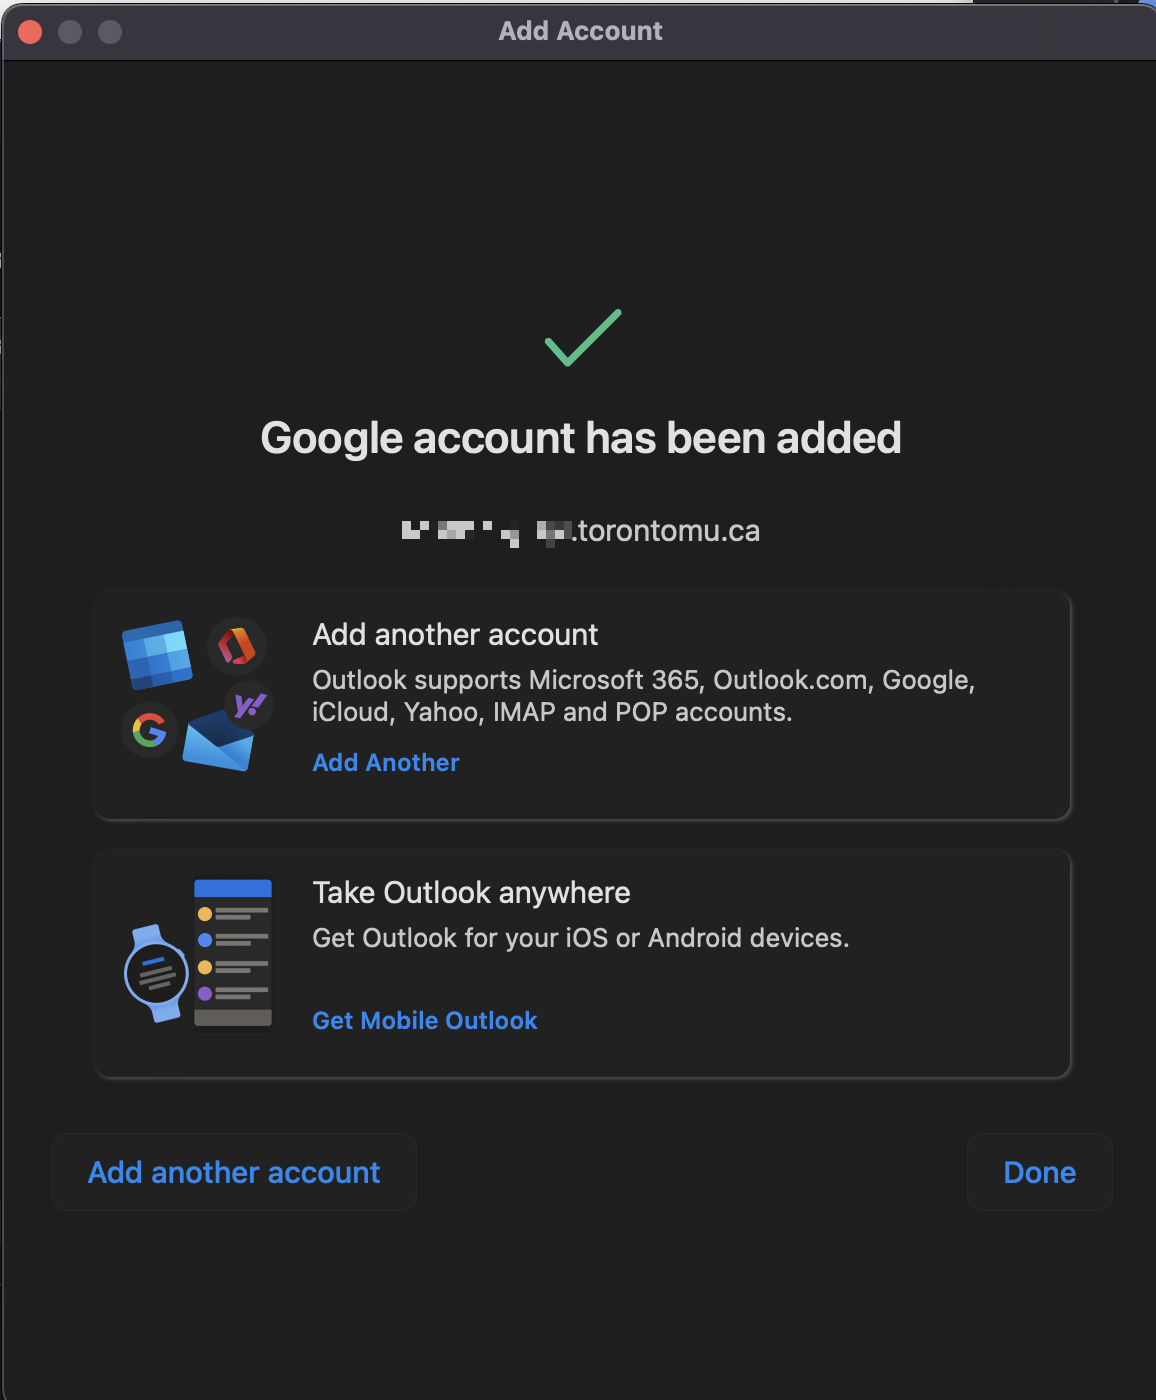 Google account has been added screen